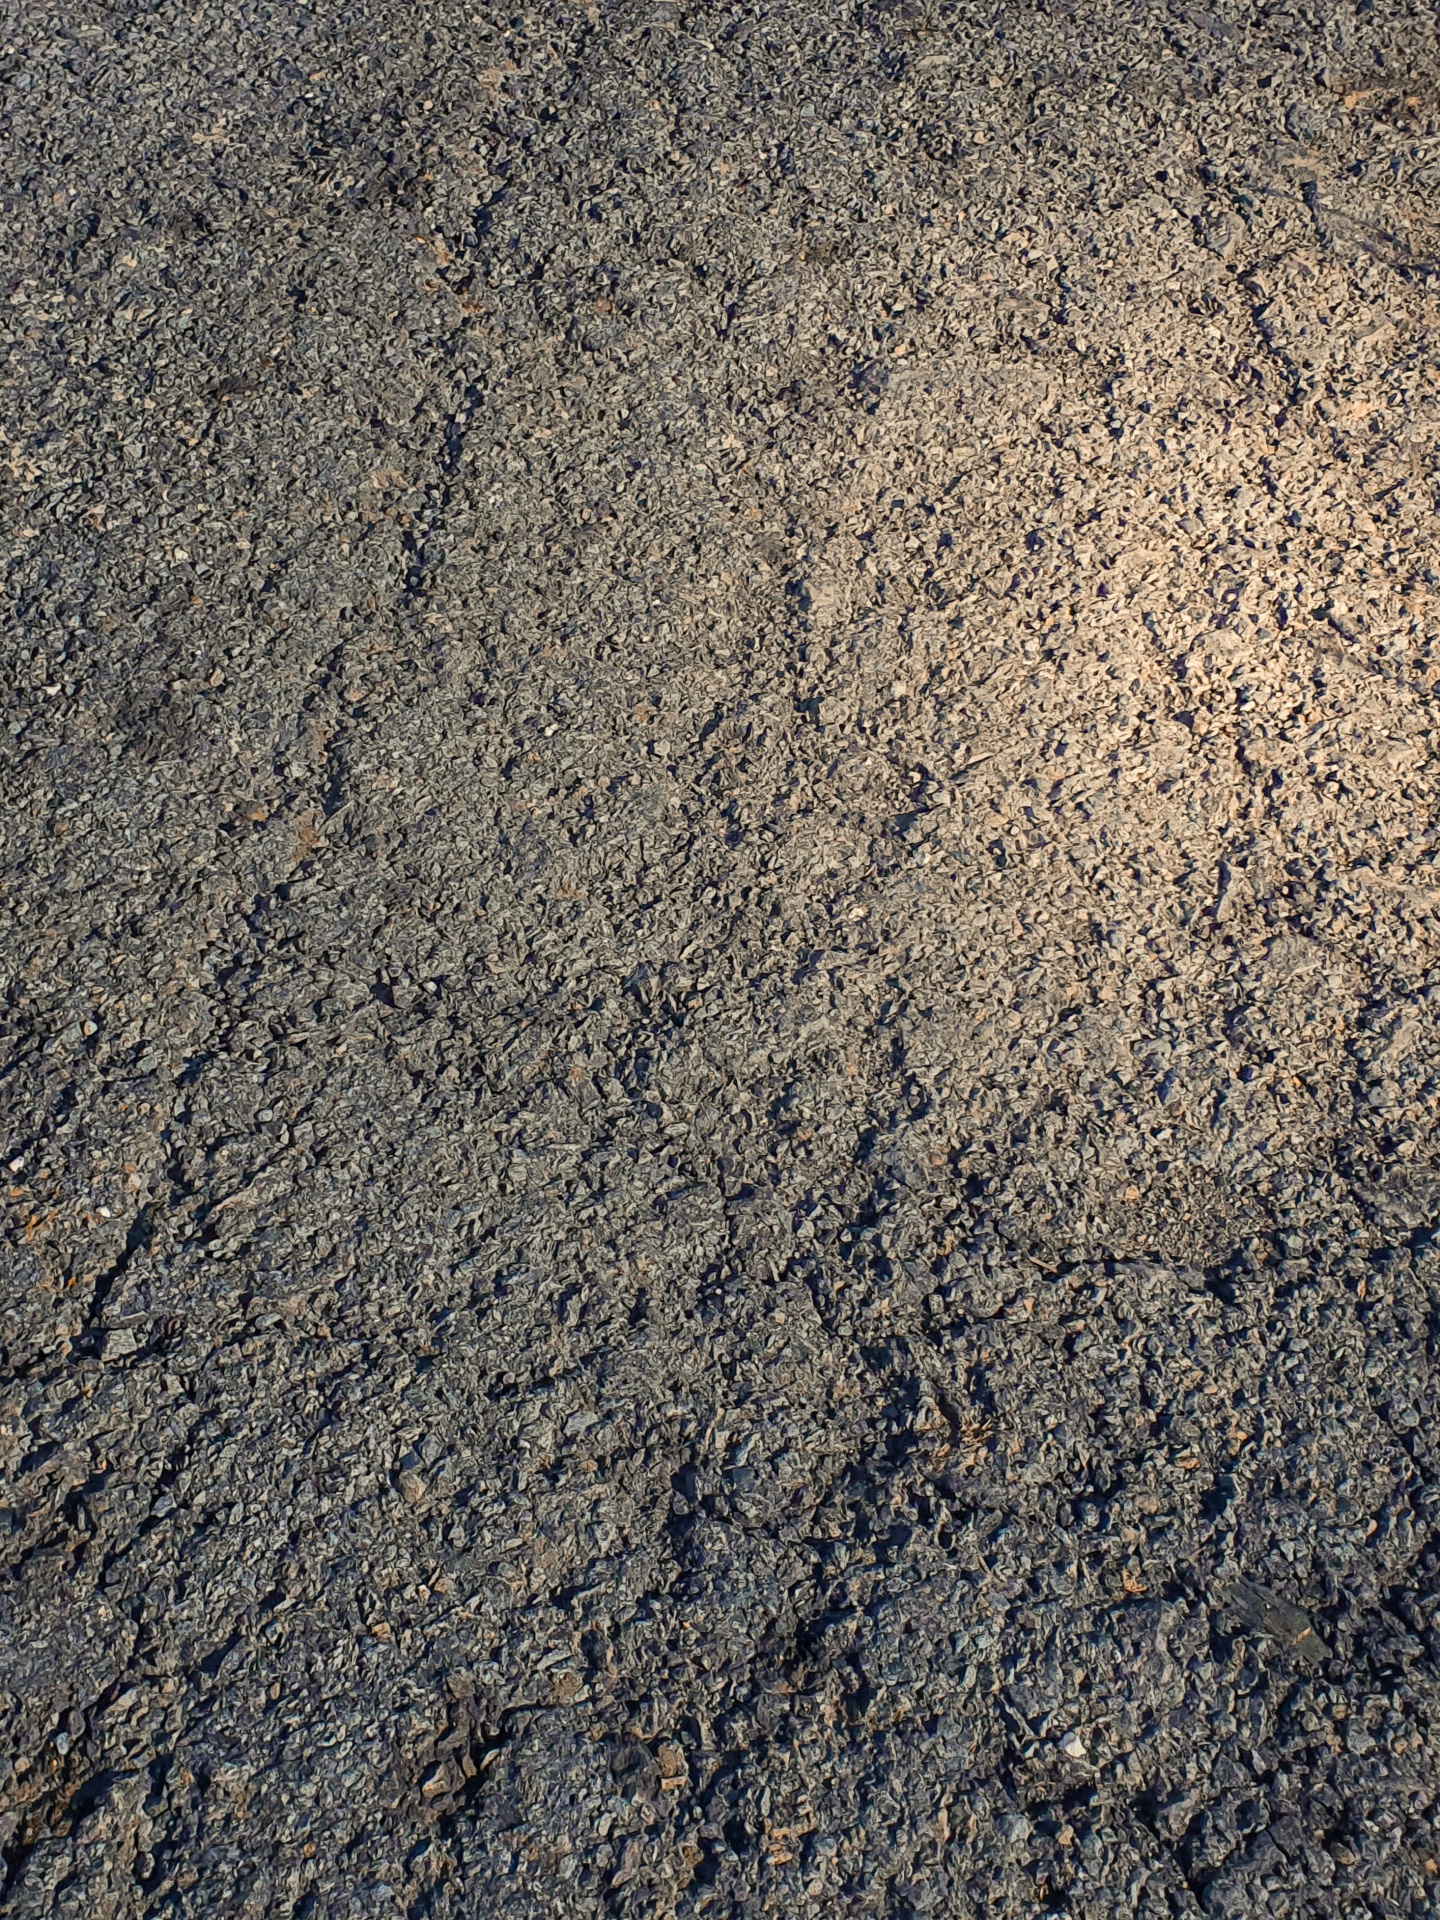 Asphalt Road Texture